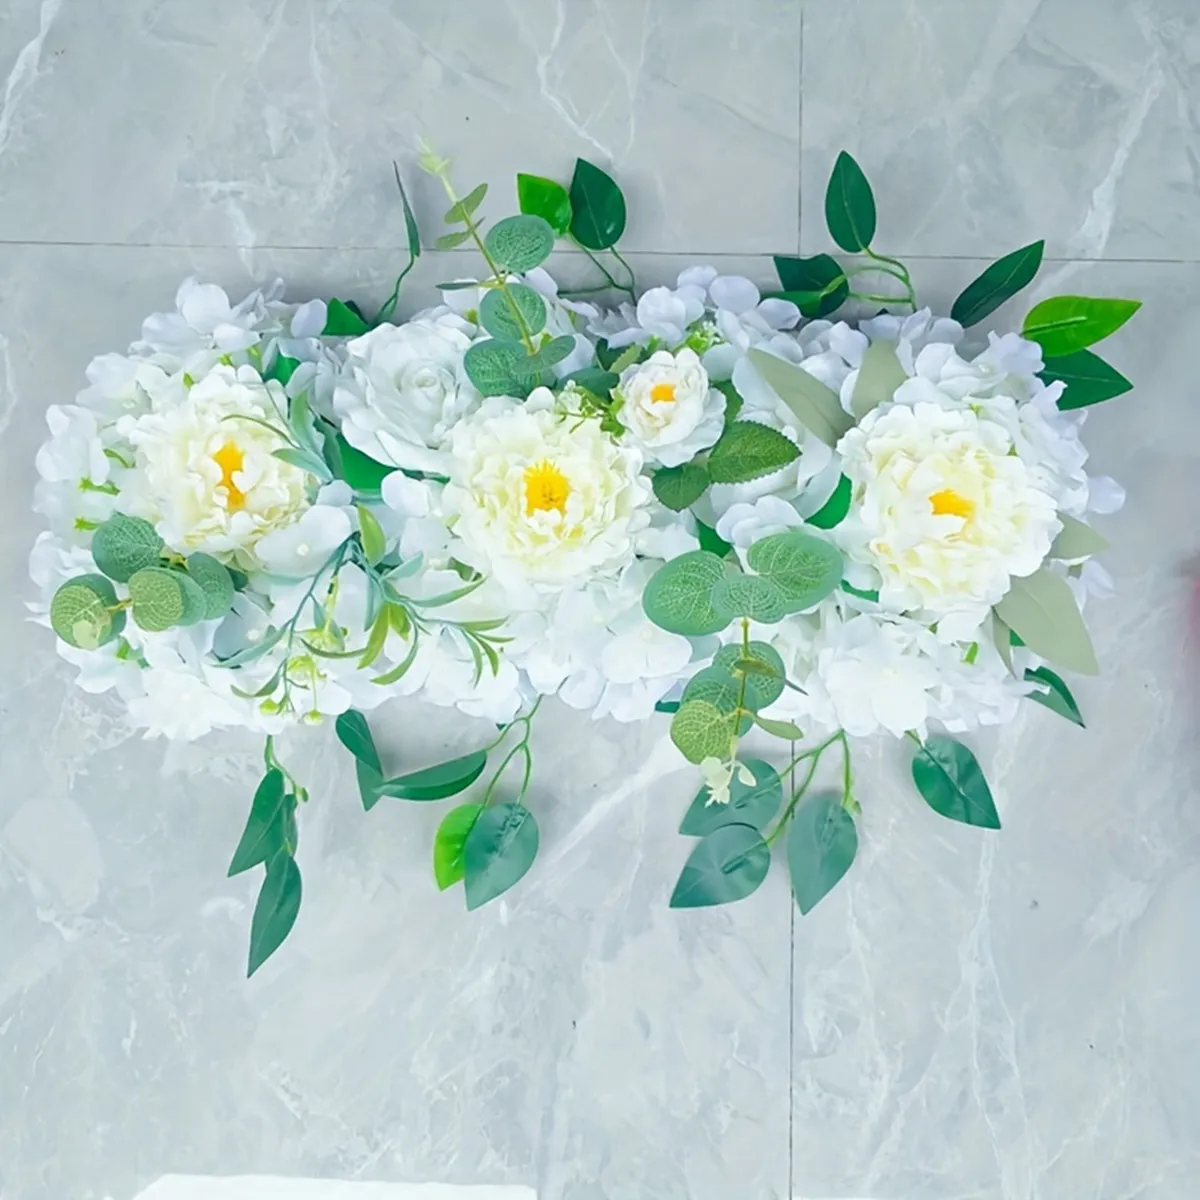 Artificial White Rose Hydrangea Decorative Flowers Wall Row For Wedding Decoration Arrangement Supplies